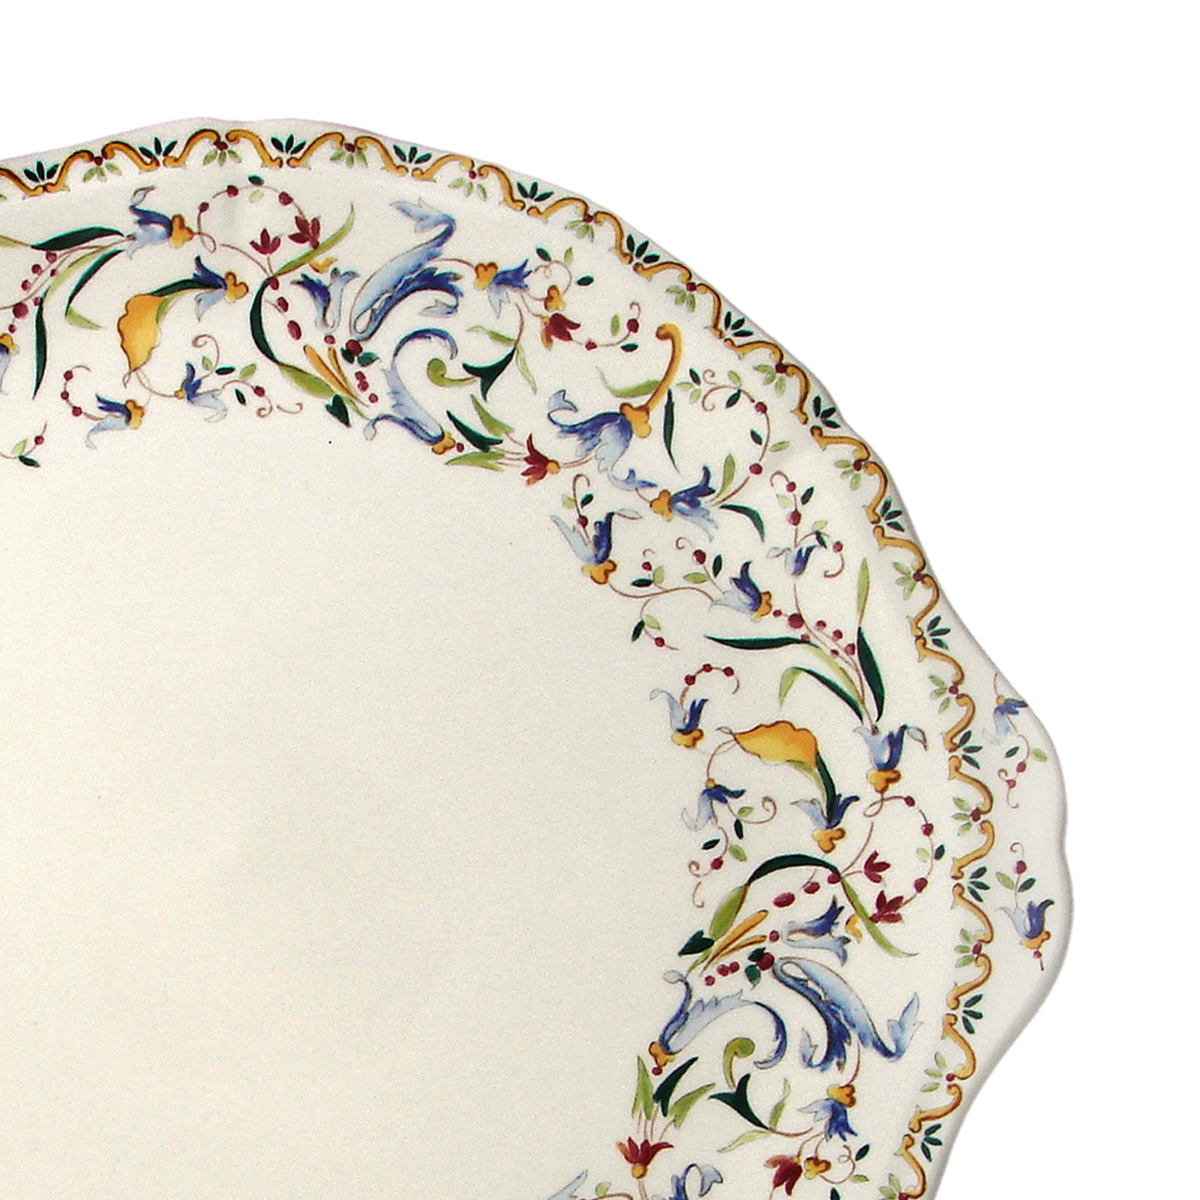 Toscana Cake Platter